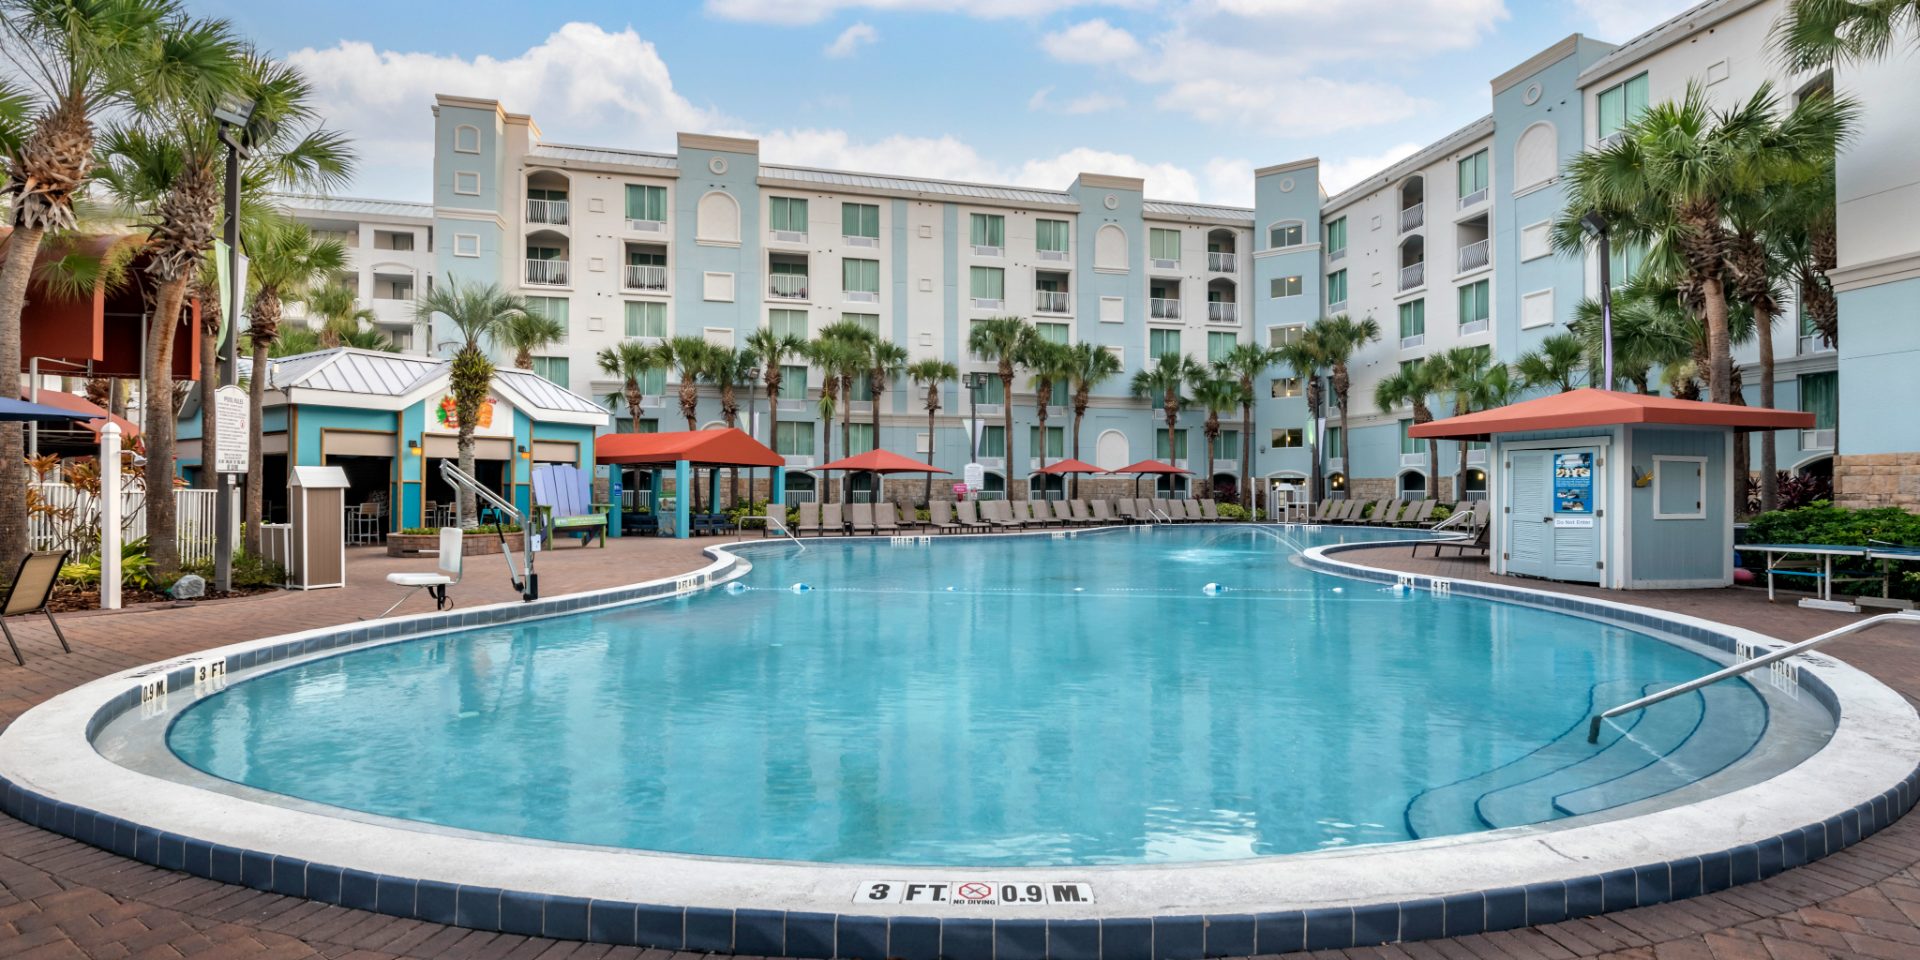 Holiday Inn hotel pool